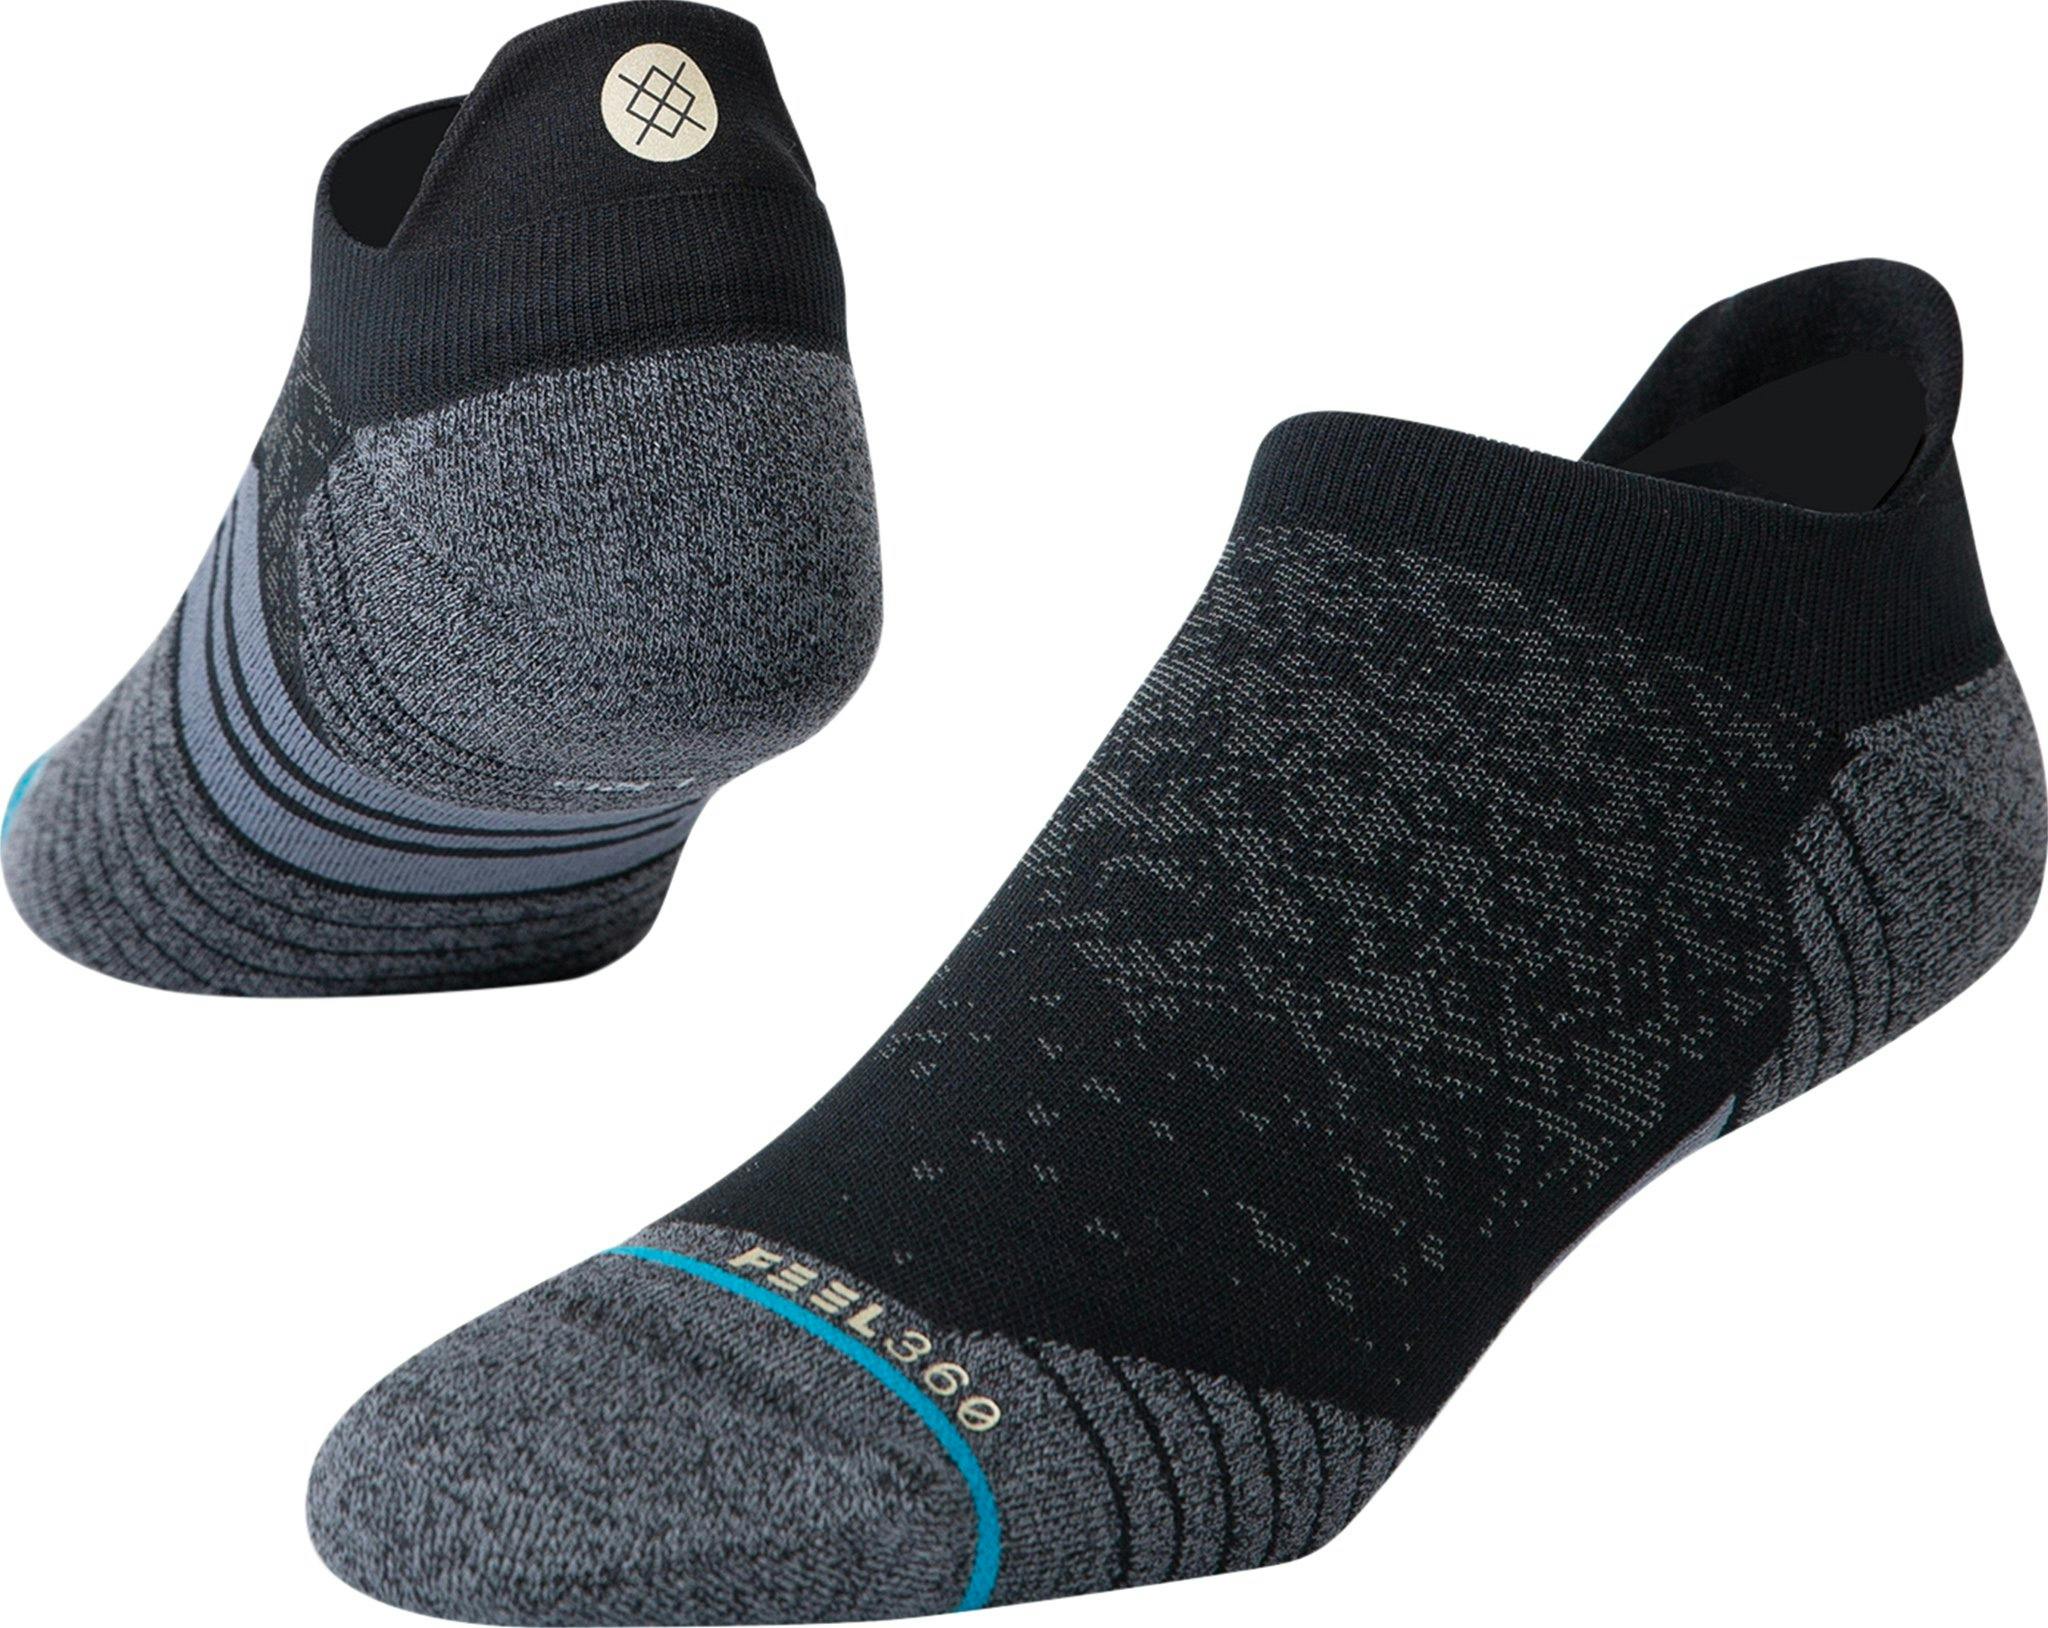 Product image for Run Light Tab Socks - Unisex